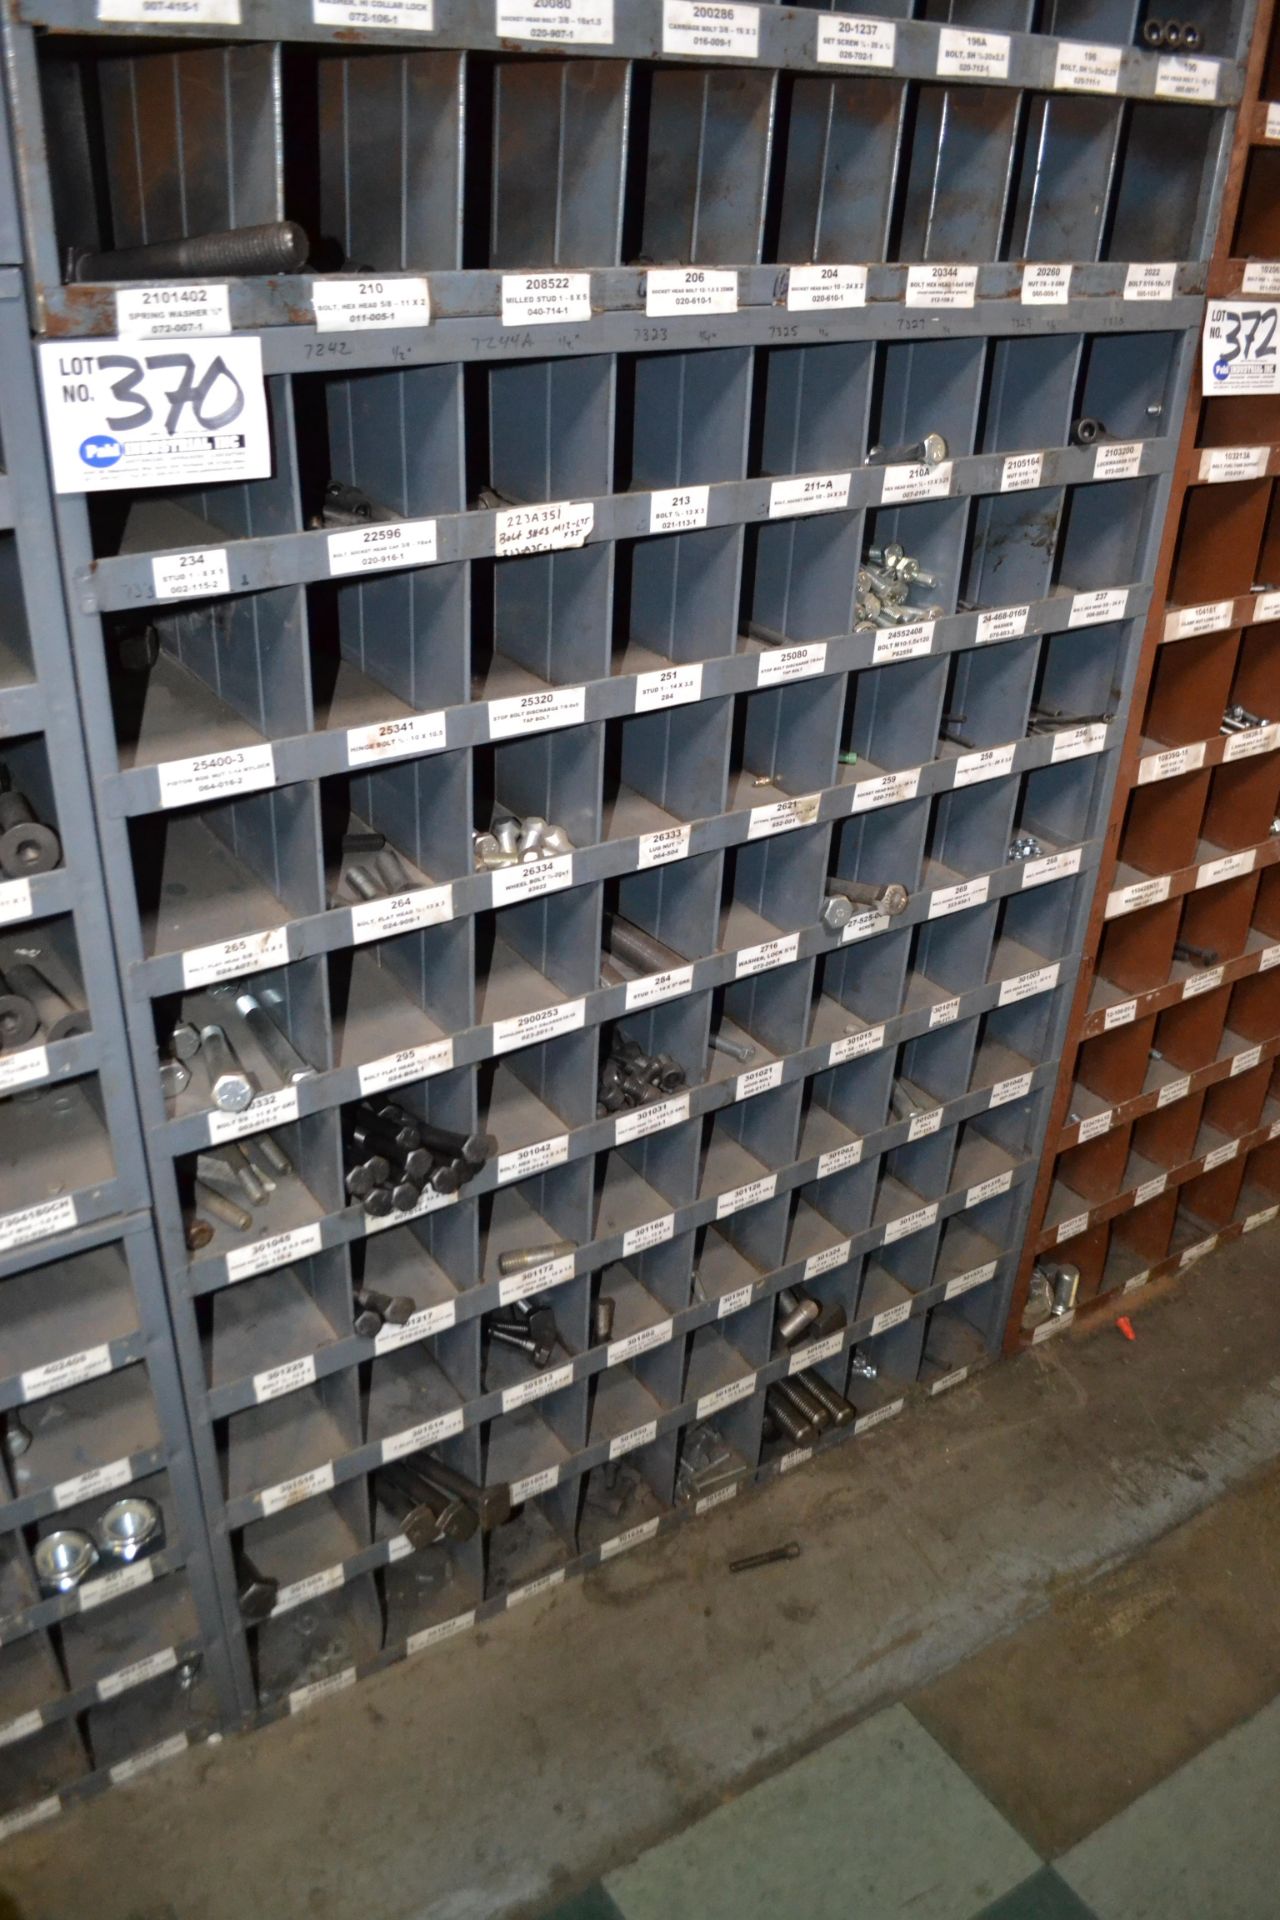 72 bin metal hardware cabinet